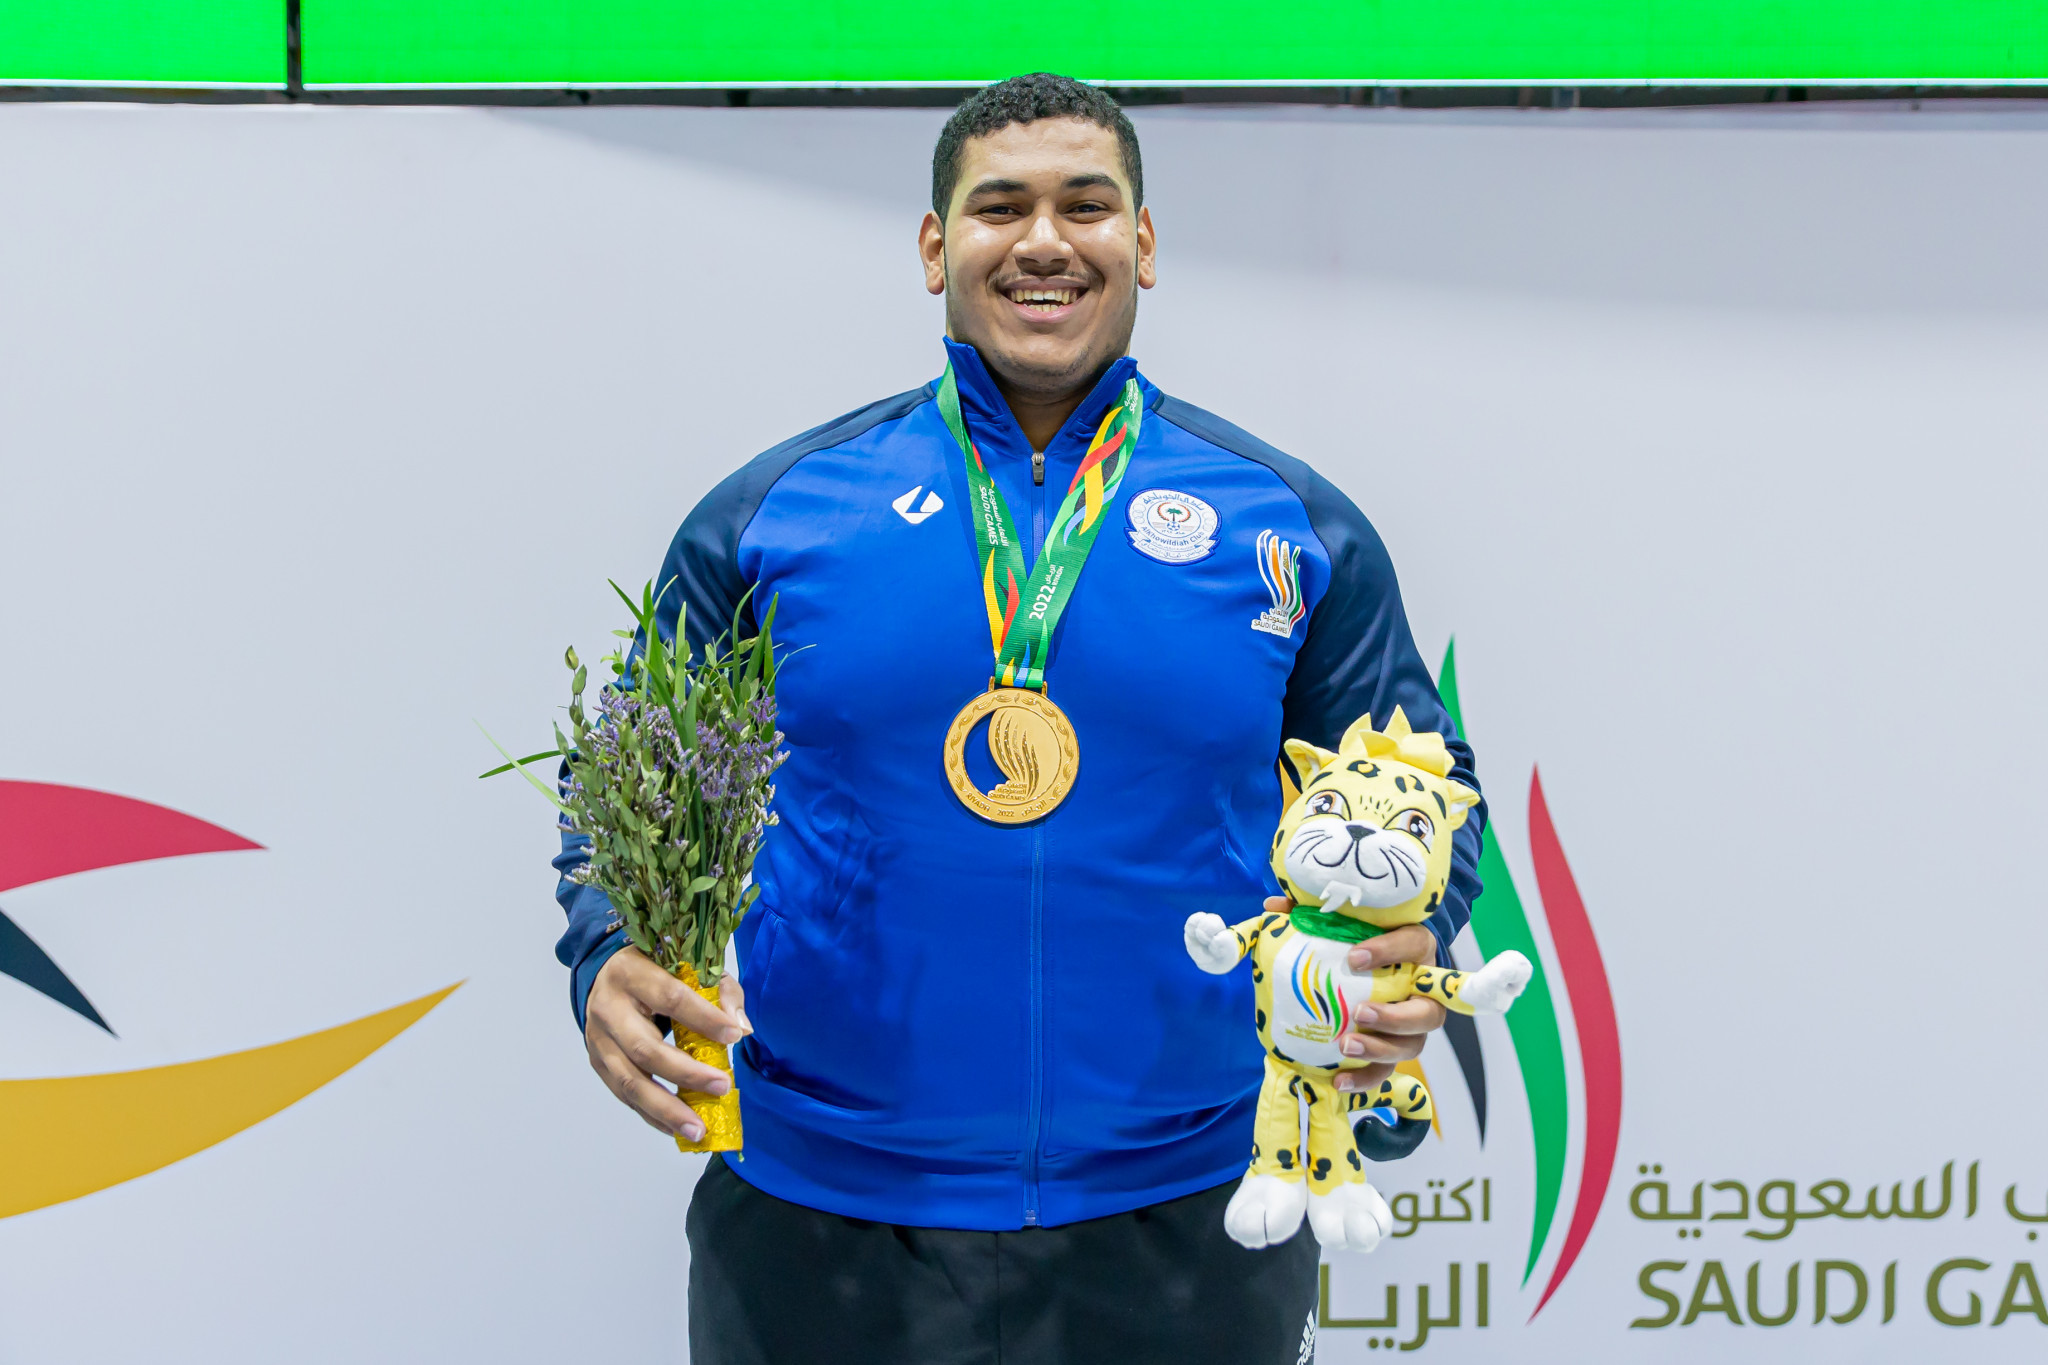 Al-Radhi overturns deficit to win spectacular gold at Saudi Games